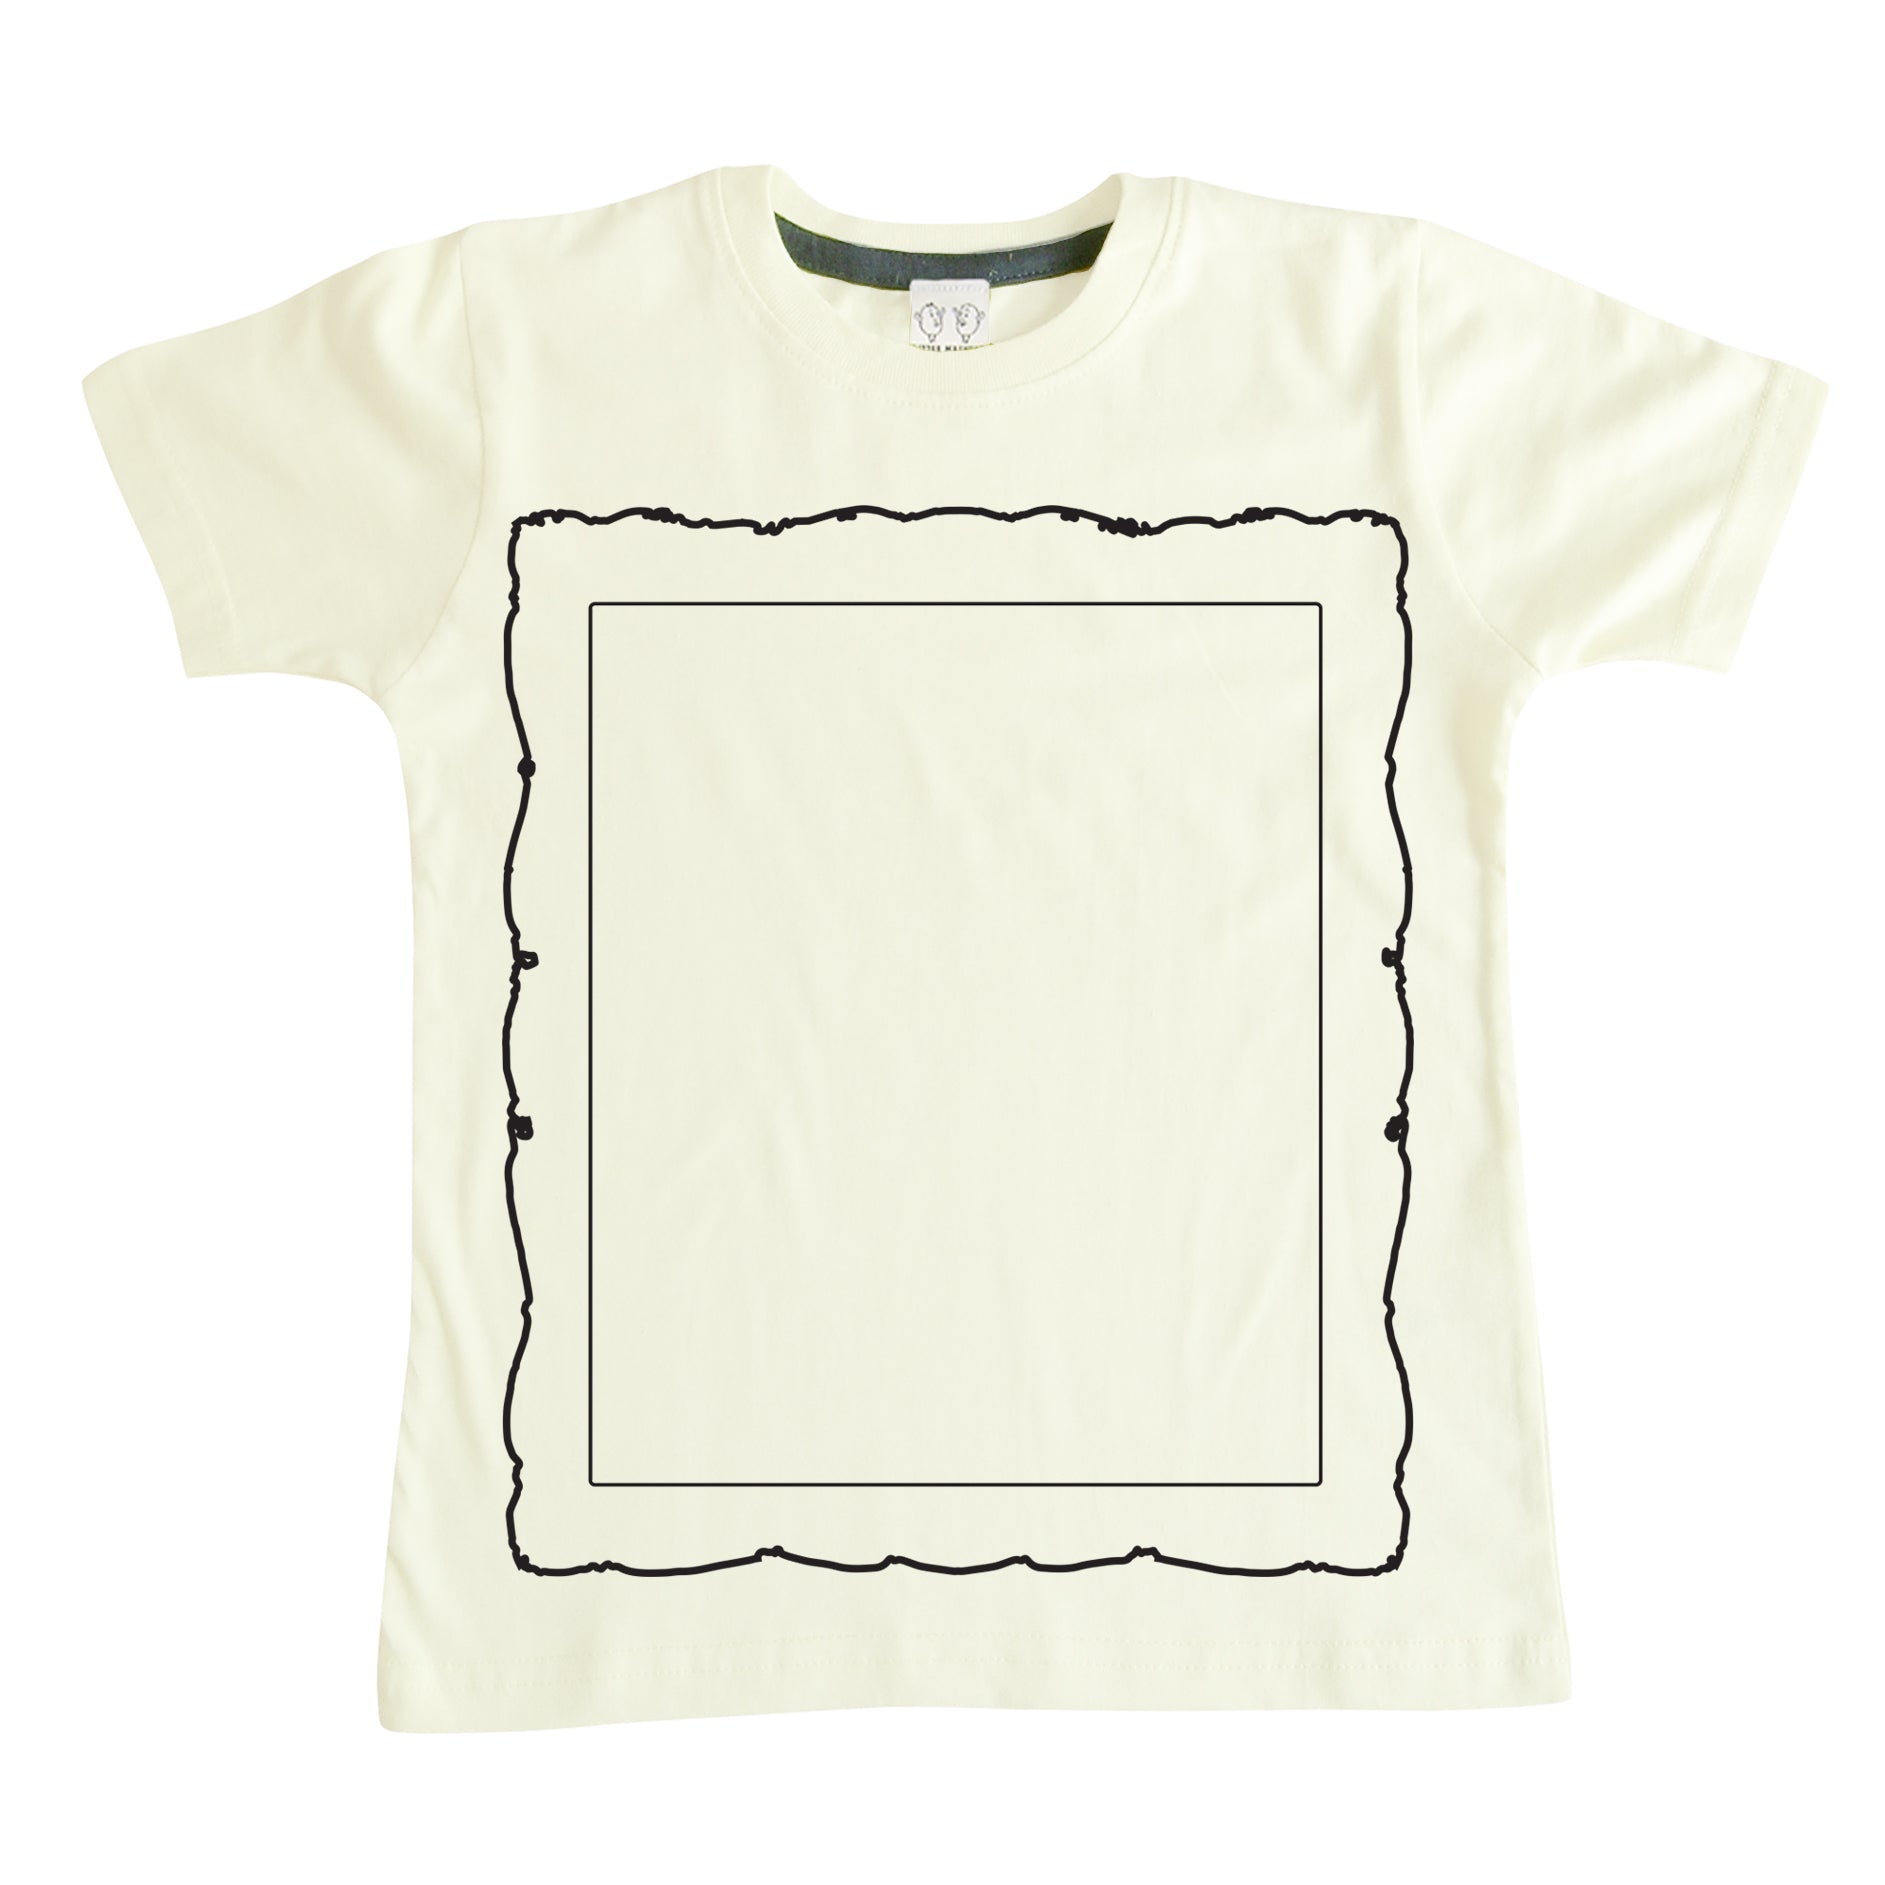 T-shirt Creator Kit Portrait Design